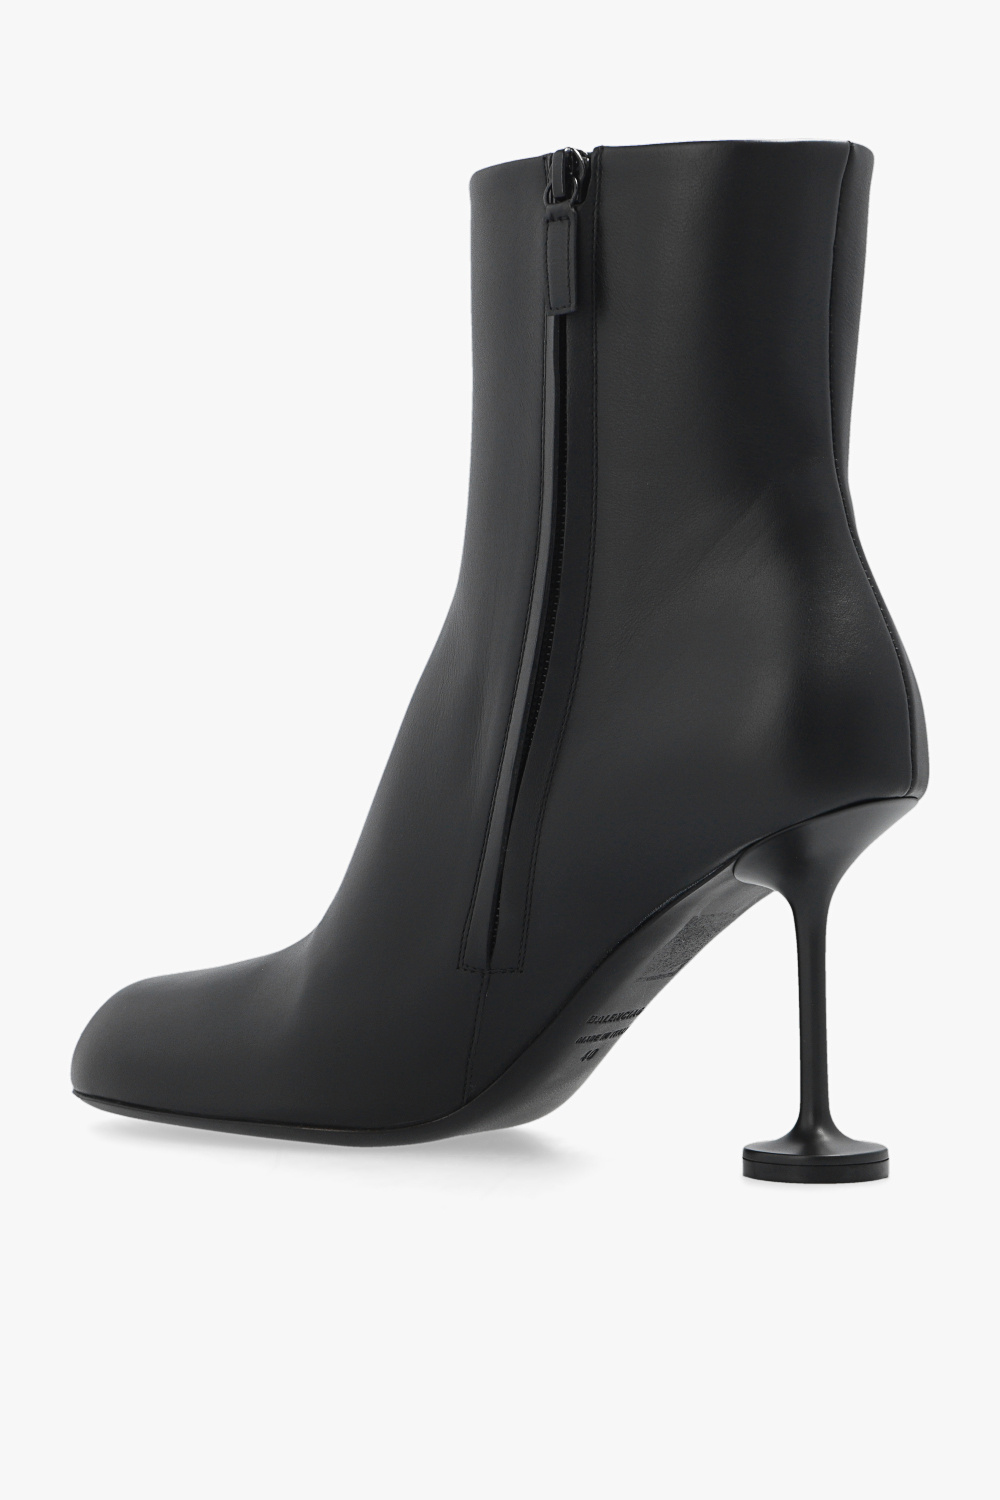 Louis Vuitton Star Trail Ankle Boot - Vitkac shop online